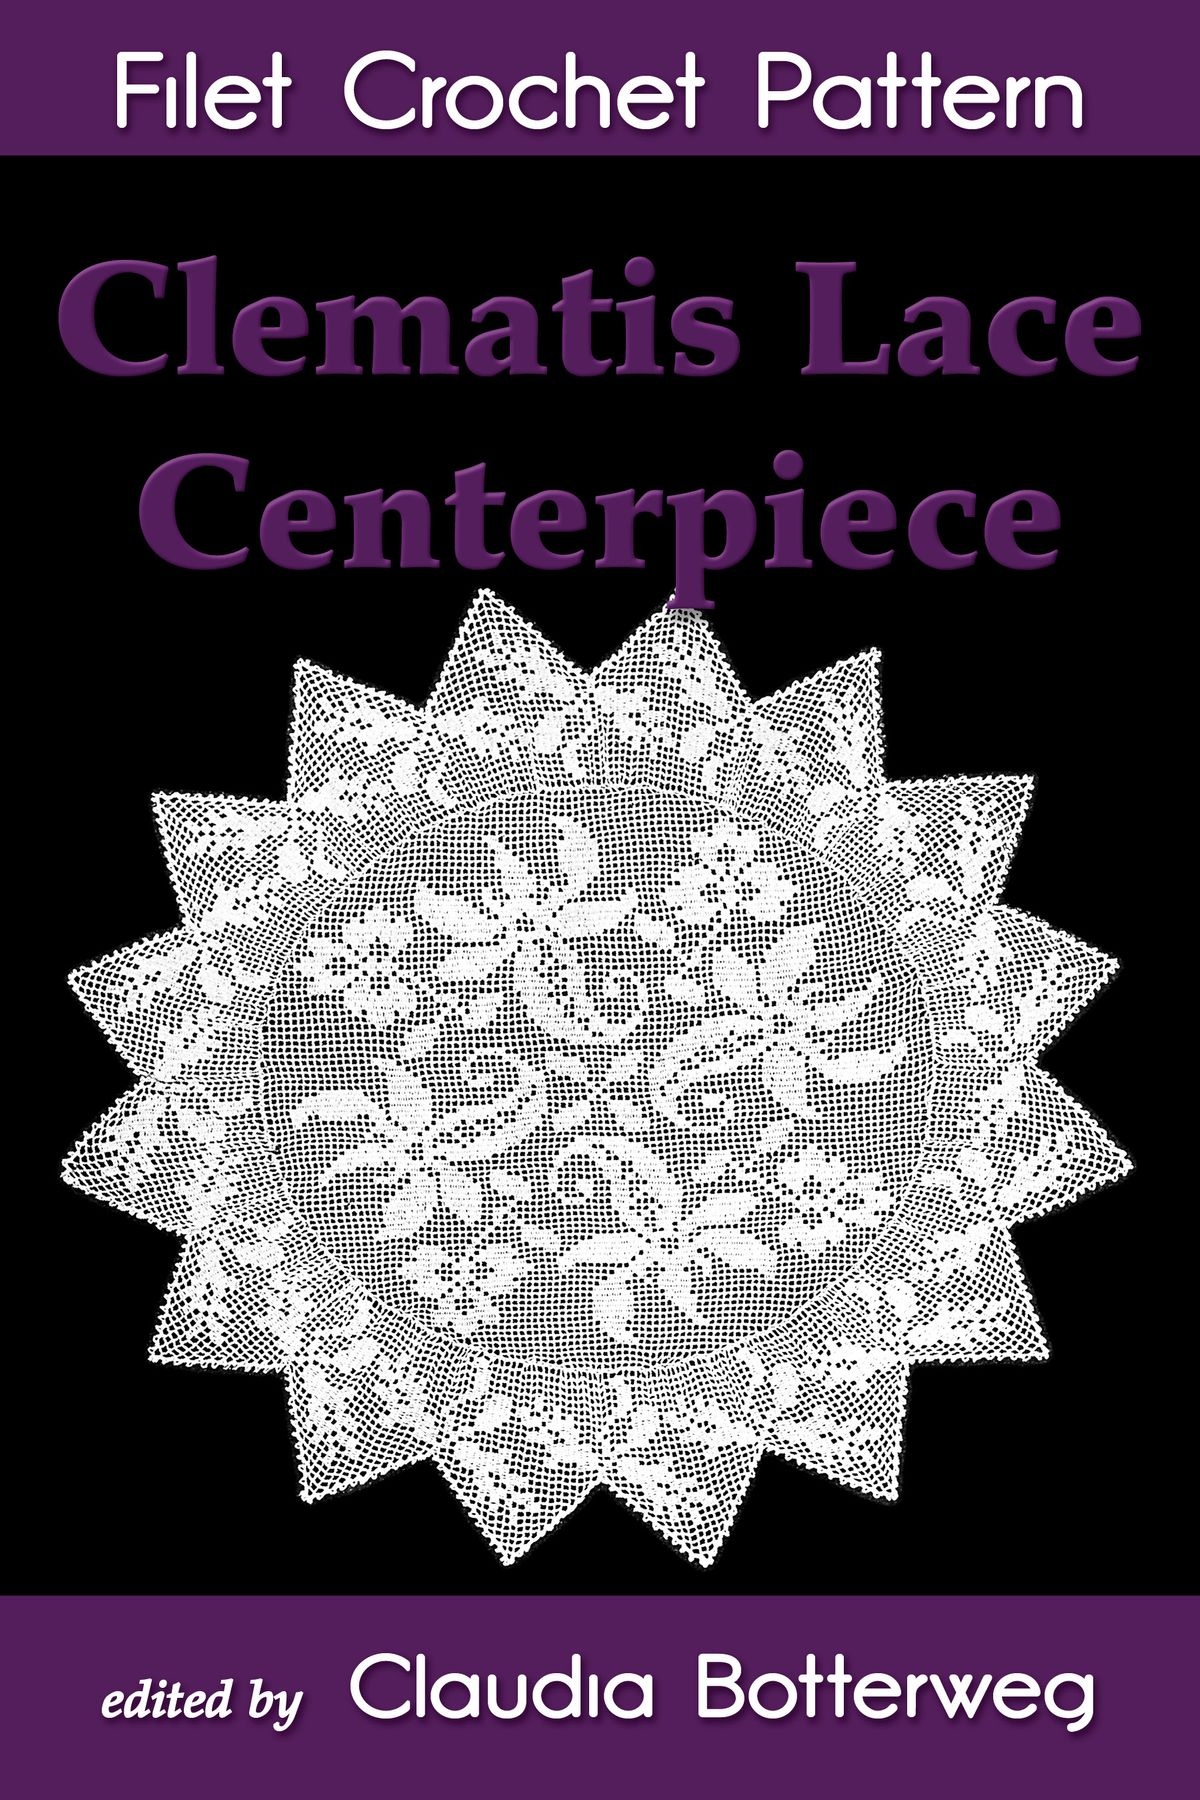 Crochet Centerpiece Pattern Clematis Lace Centerpiece Filet Crochet Pattern Ebook Claudia